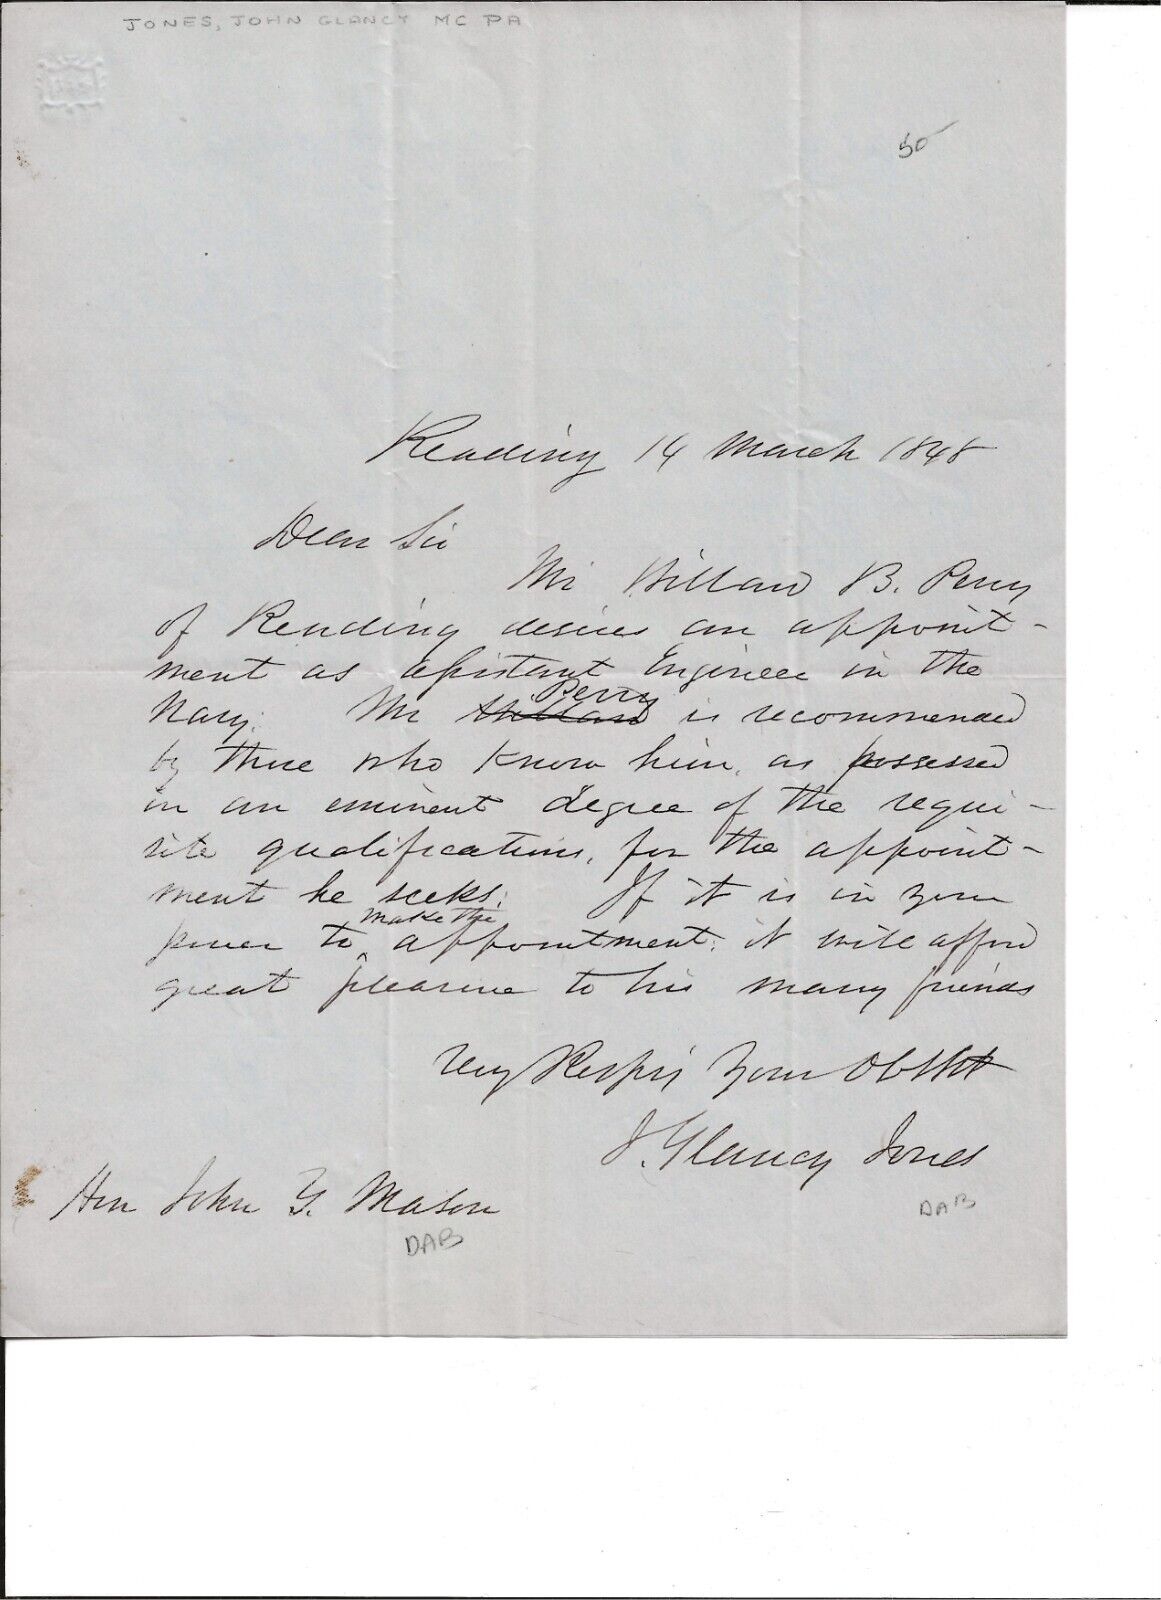 J. Glancy Jones 1848 ALS to Secretary of Navy John Mason- Penn. Rep